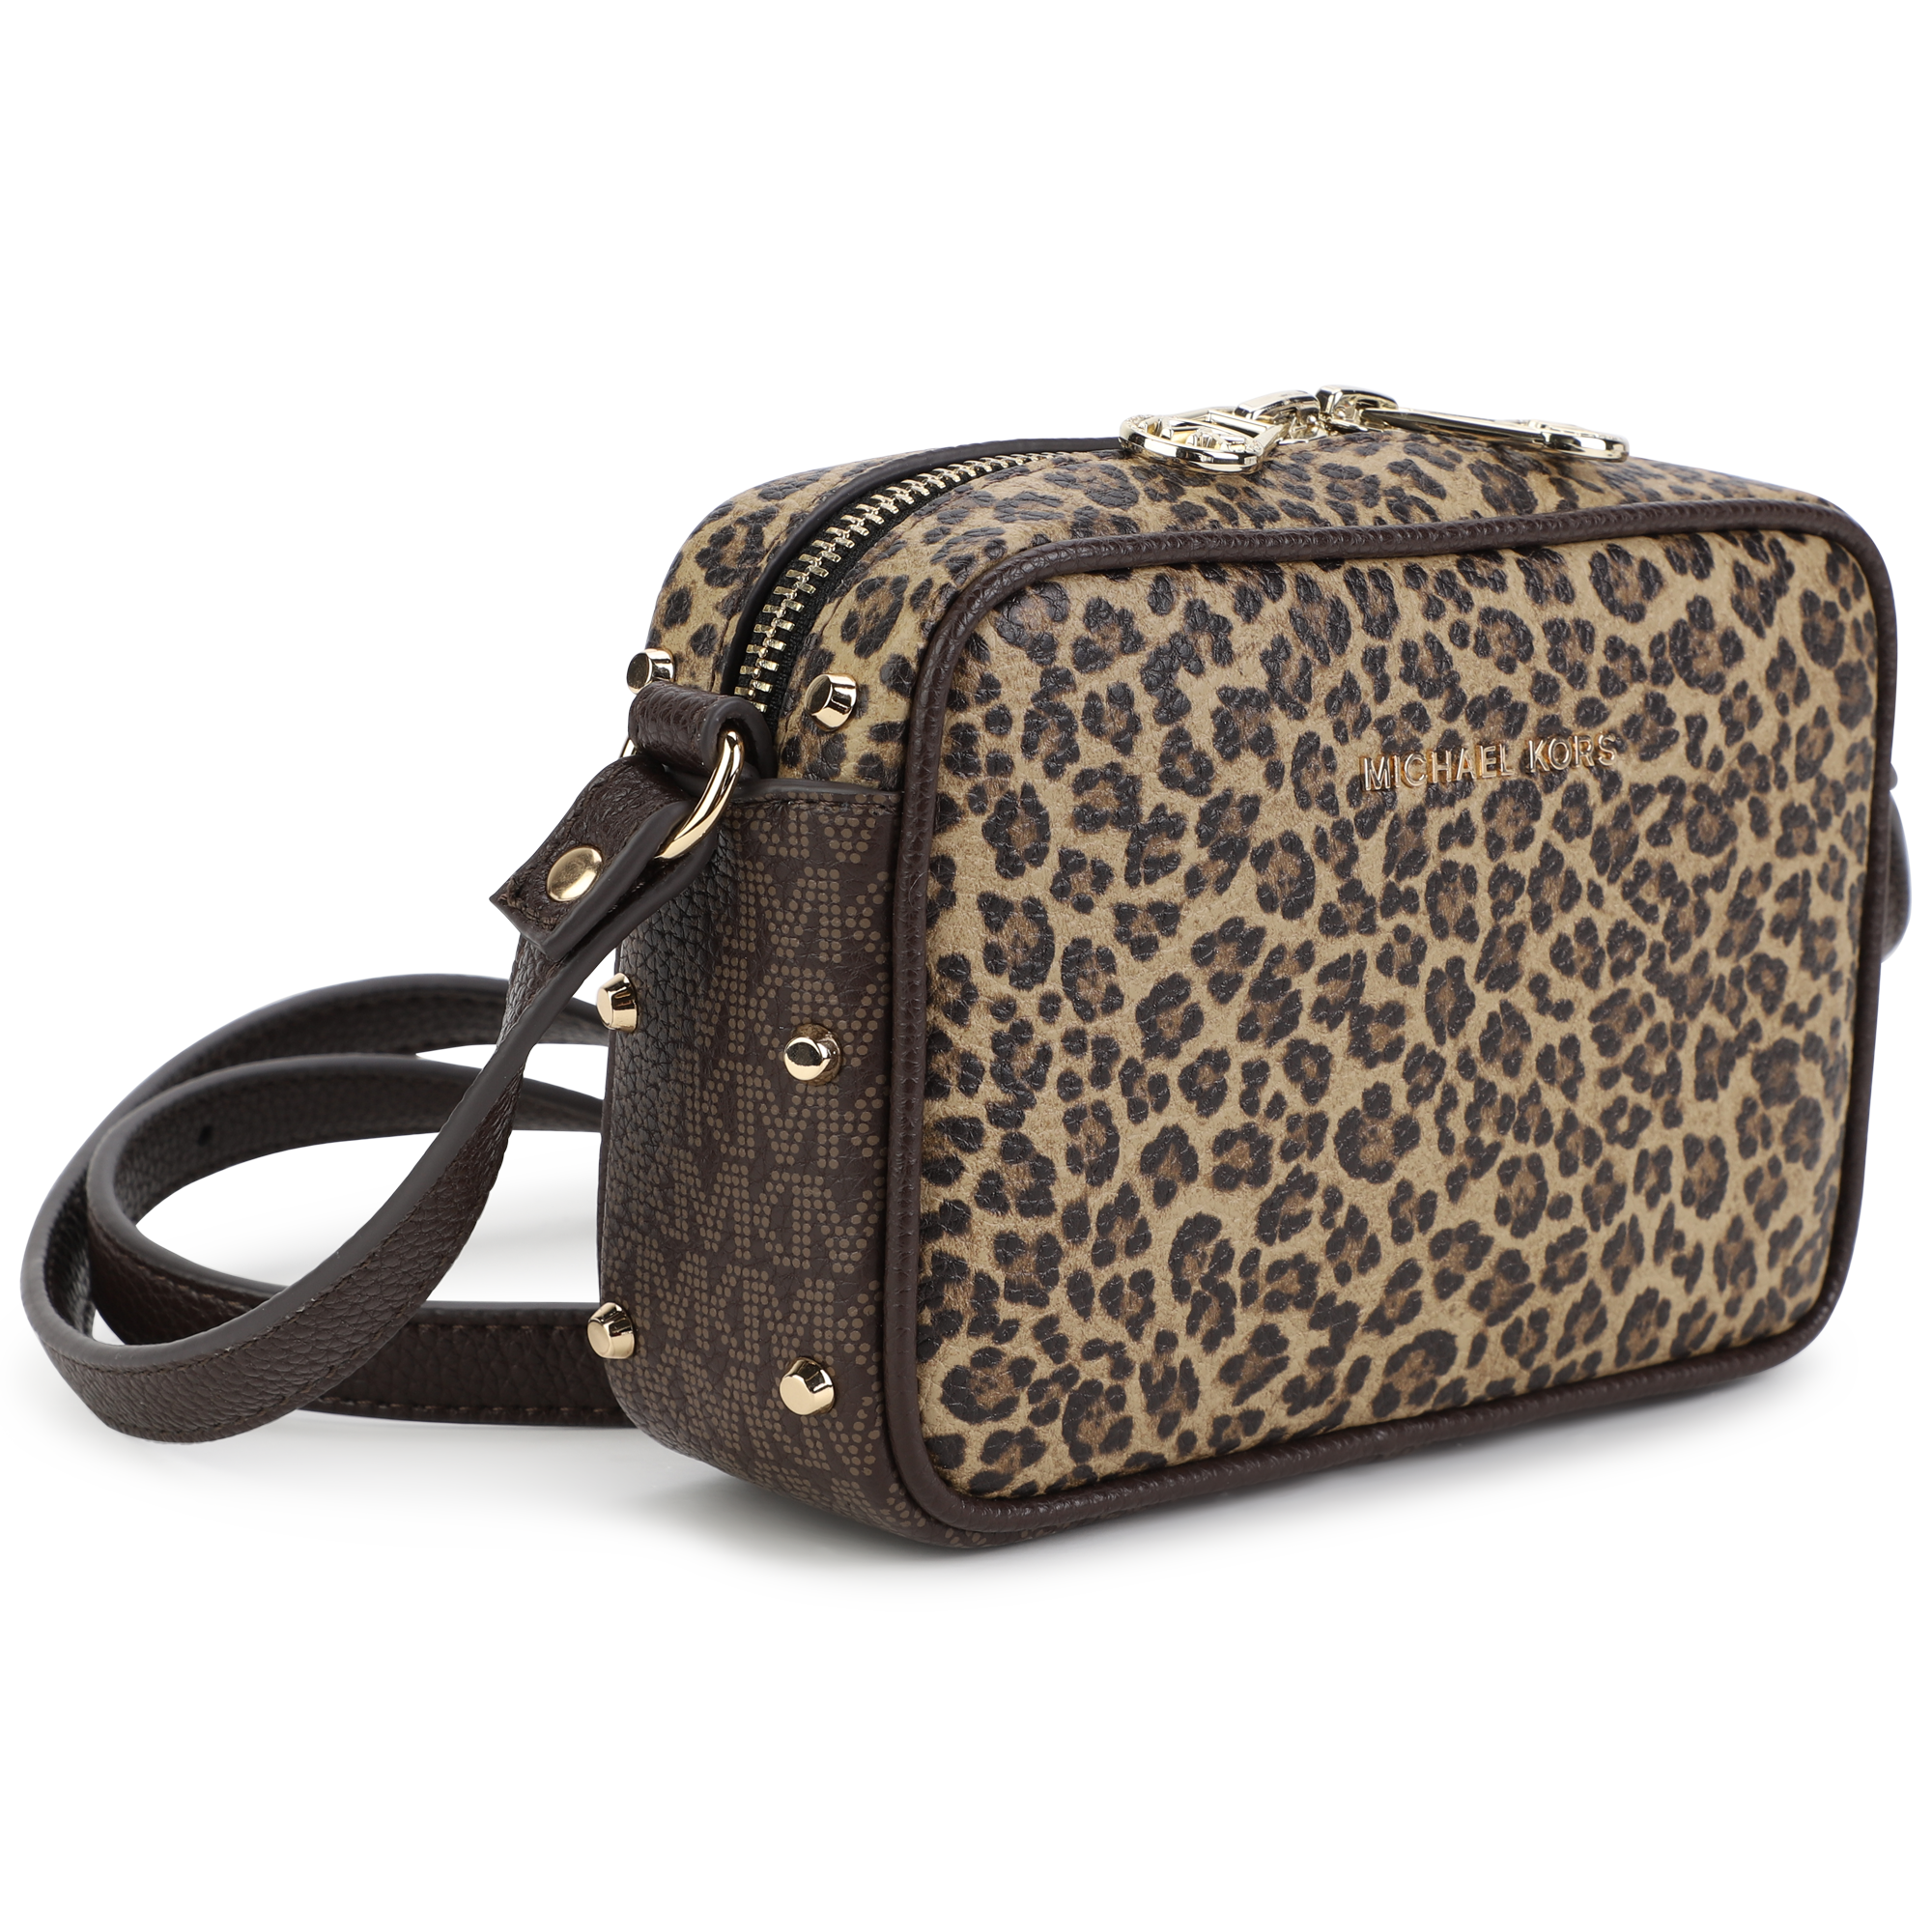 MICHAEL KORS Jet Set Animal Print Charm Small Chain Pouchette Shoulder Bag  | eBay